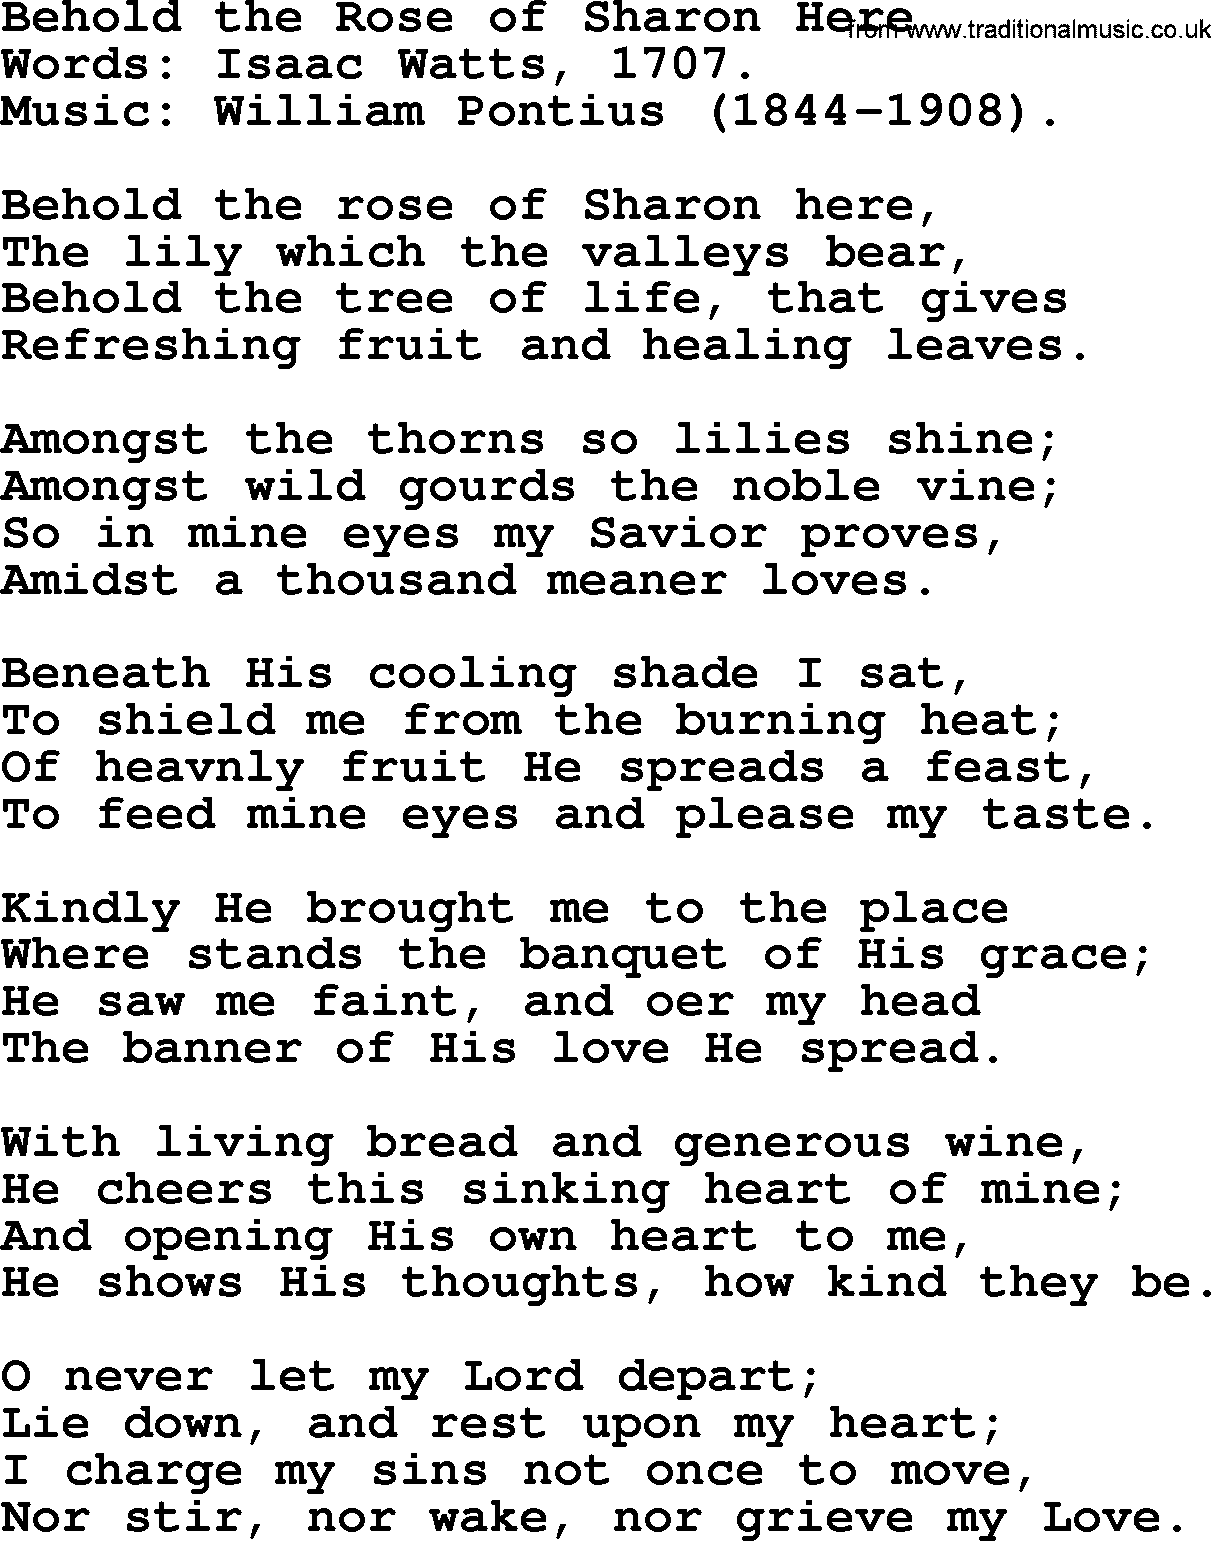 Isaac Watts Christian hymn: Behold the Rose of Sharon Here- lyricss